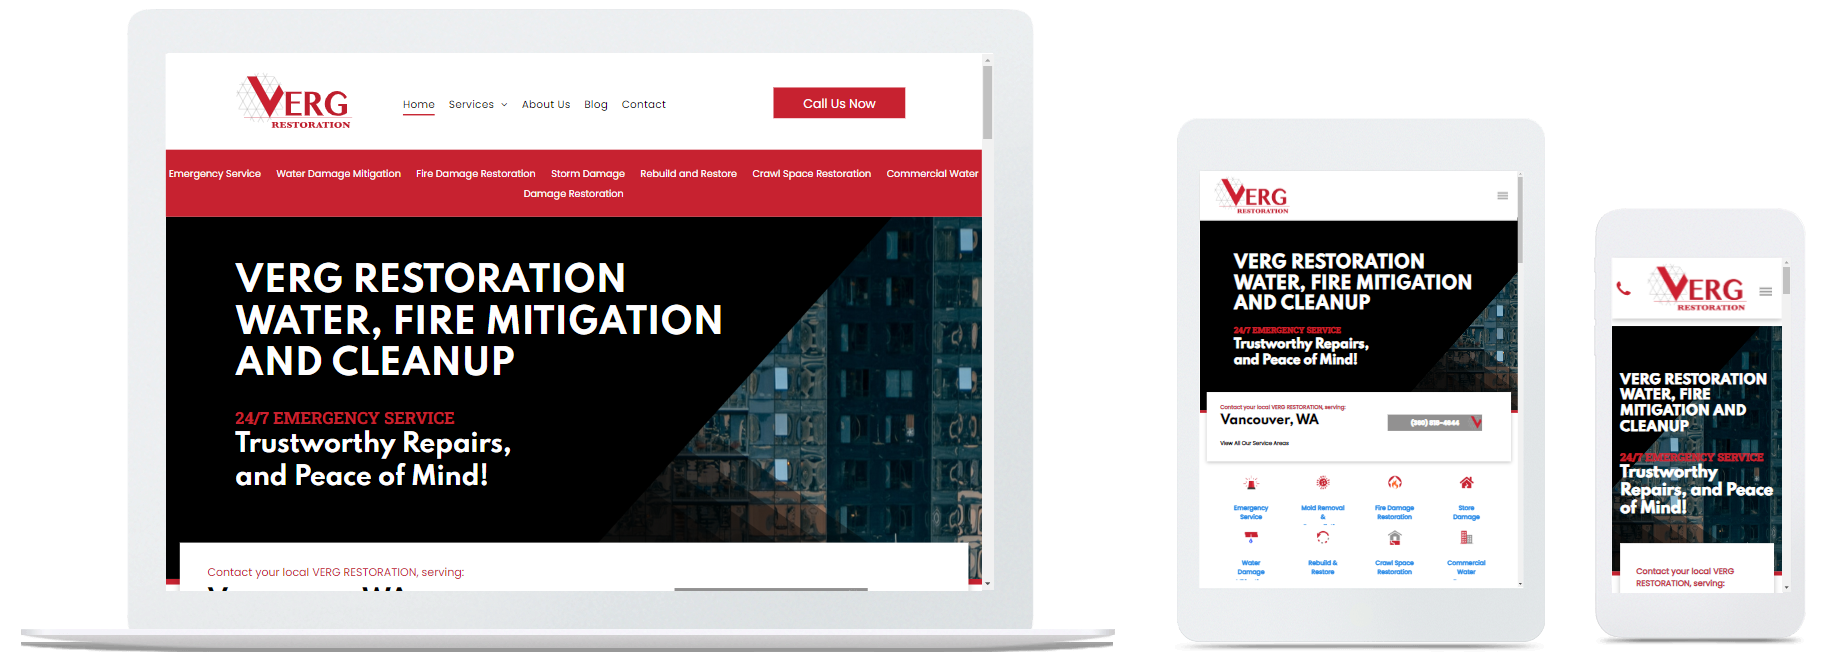 Verg Restoration Website Design with Niko & Mar Web Design